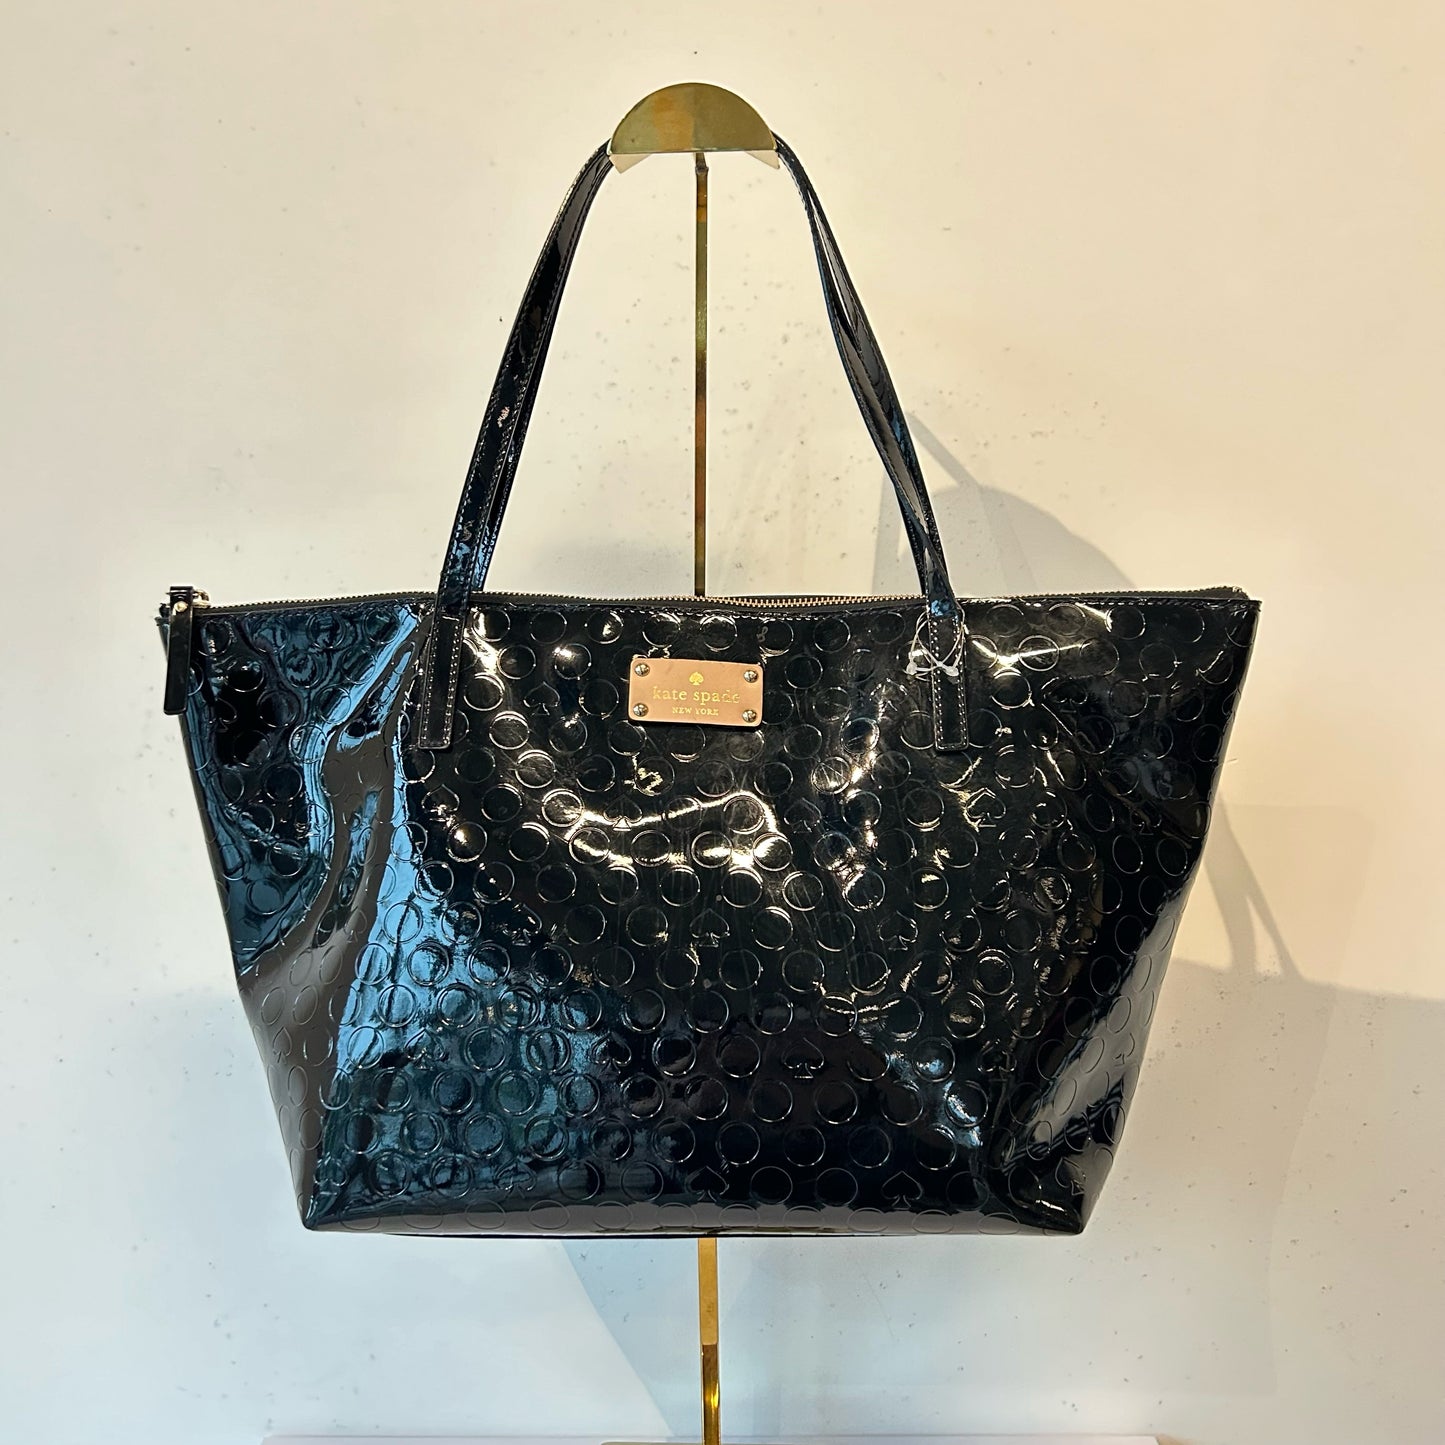 Kate Spade Black Patent Handbag